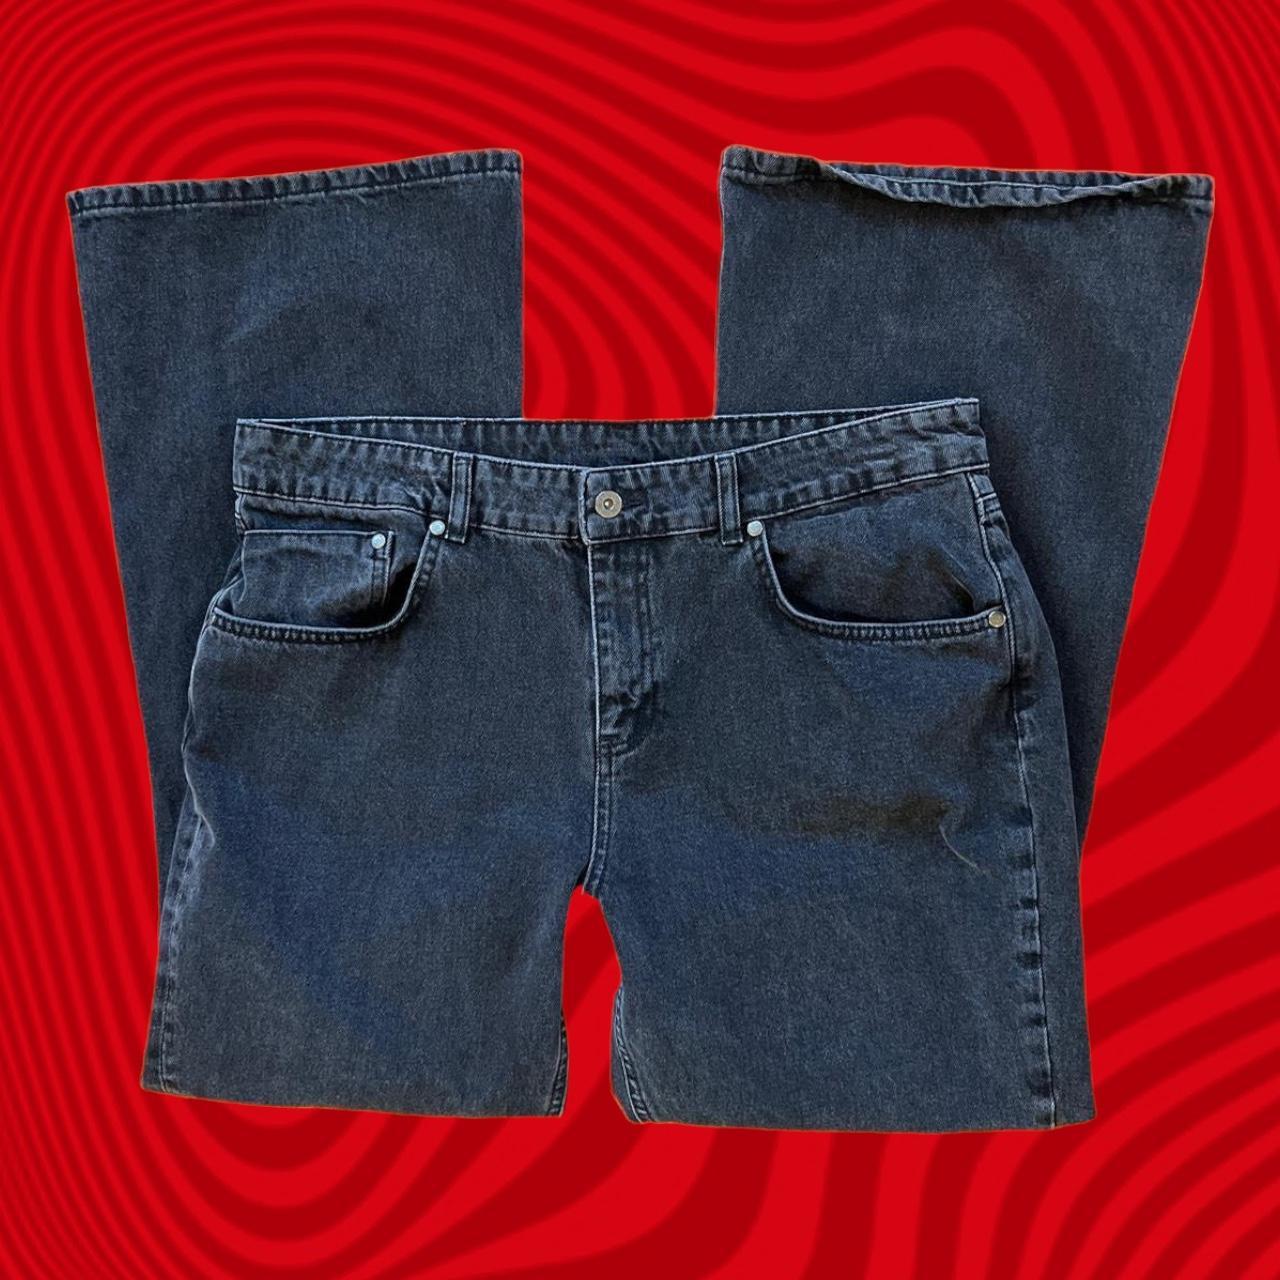 Product Image 1 - ✿Mid-rise wide-leg black denim jeans.
✿The